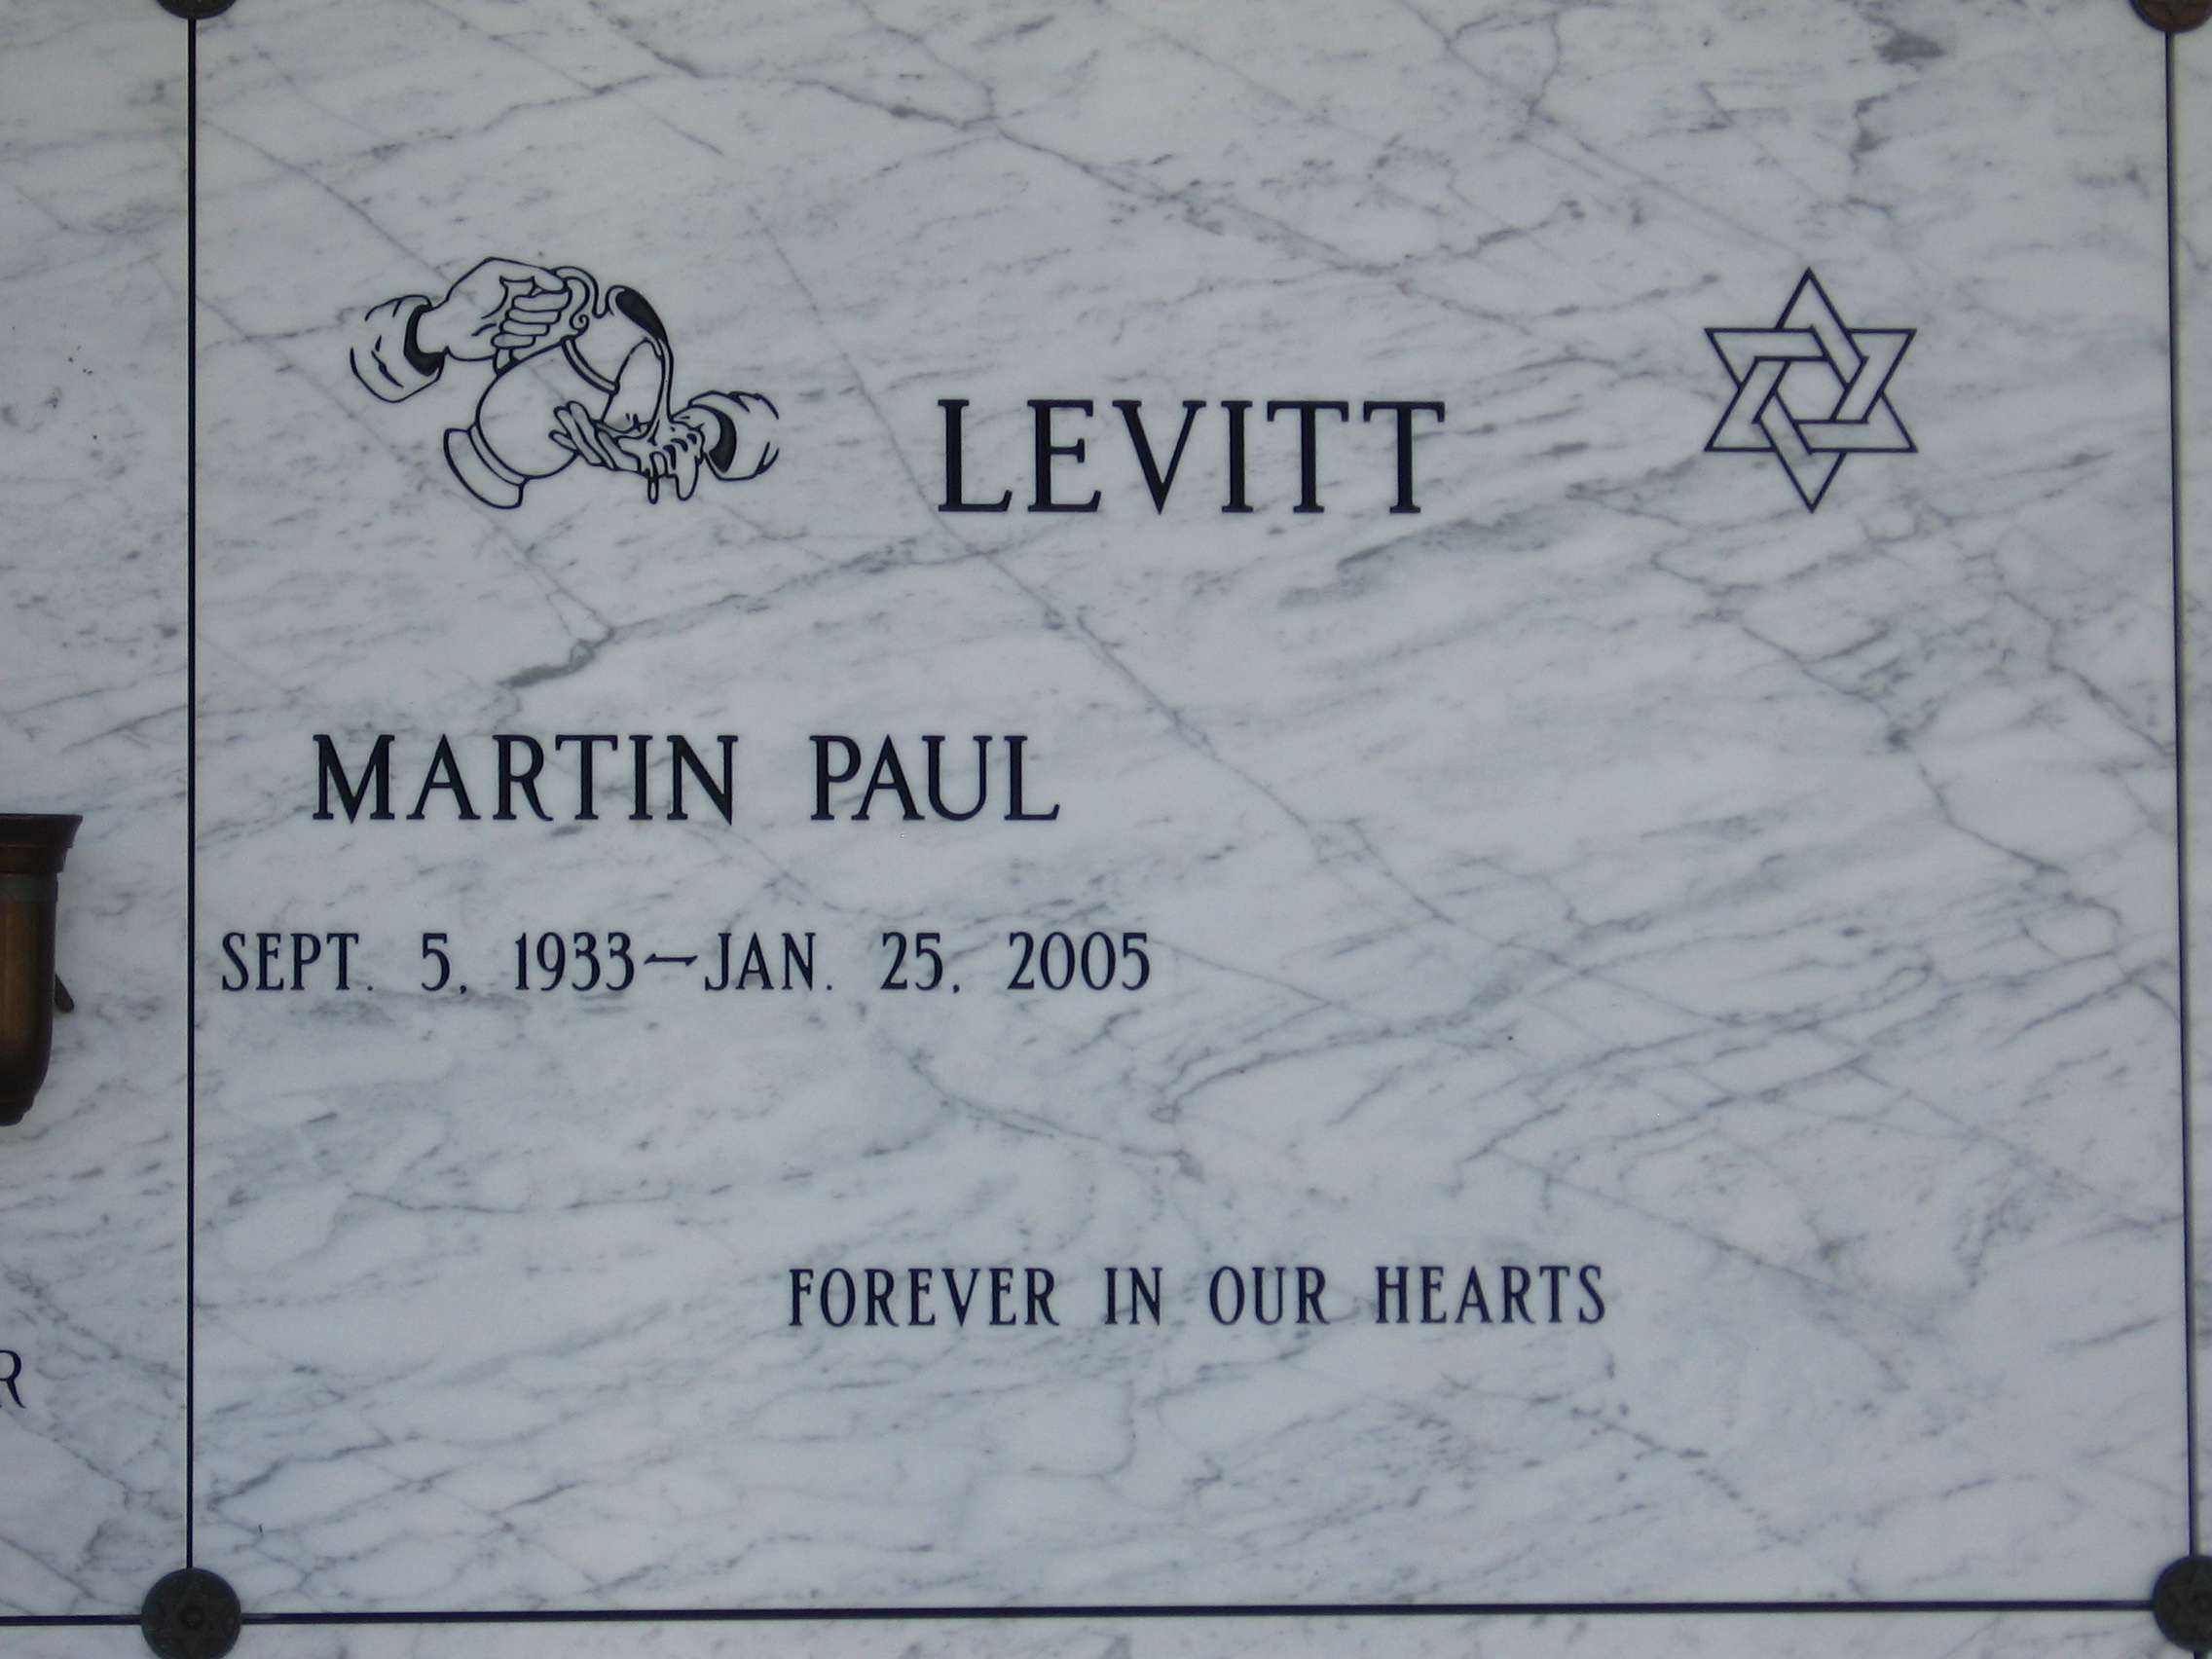 Martin Paul Levitt